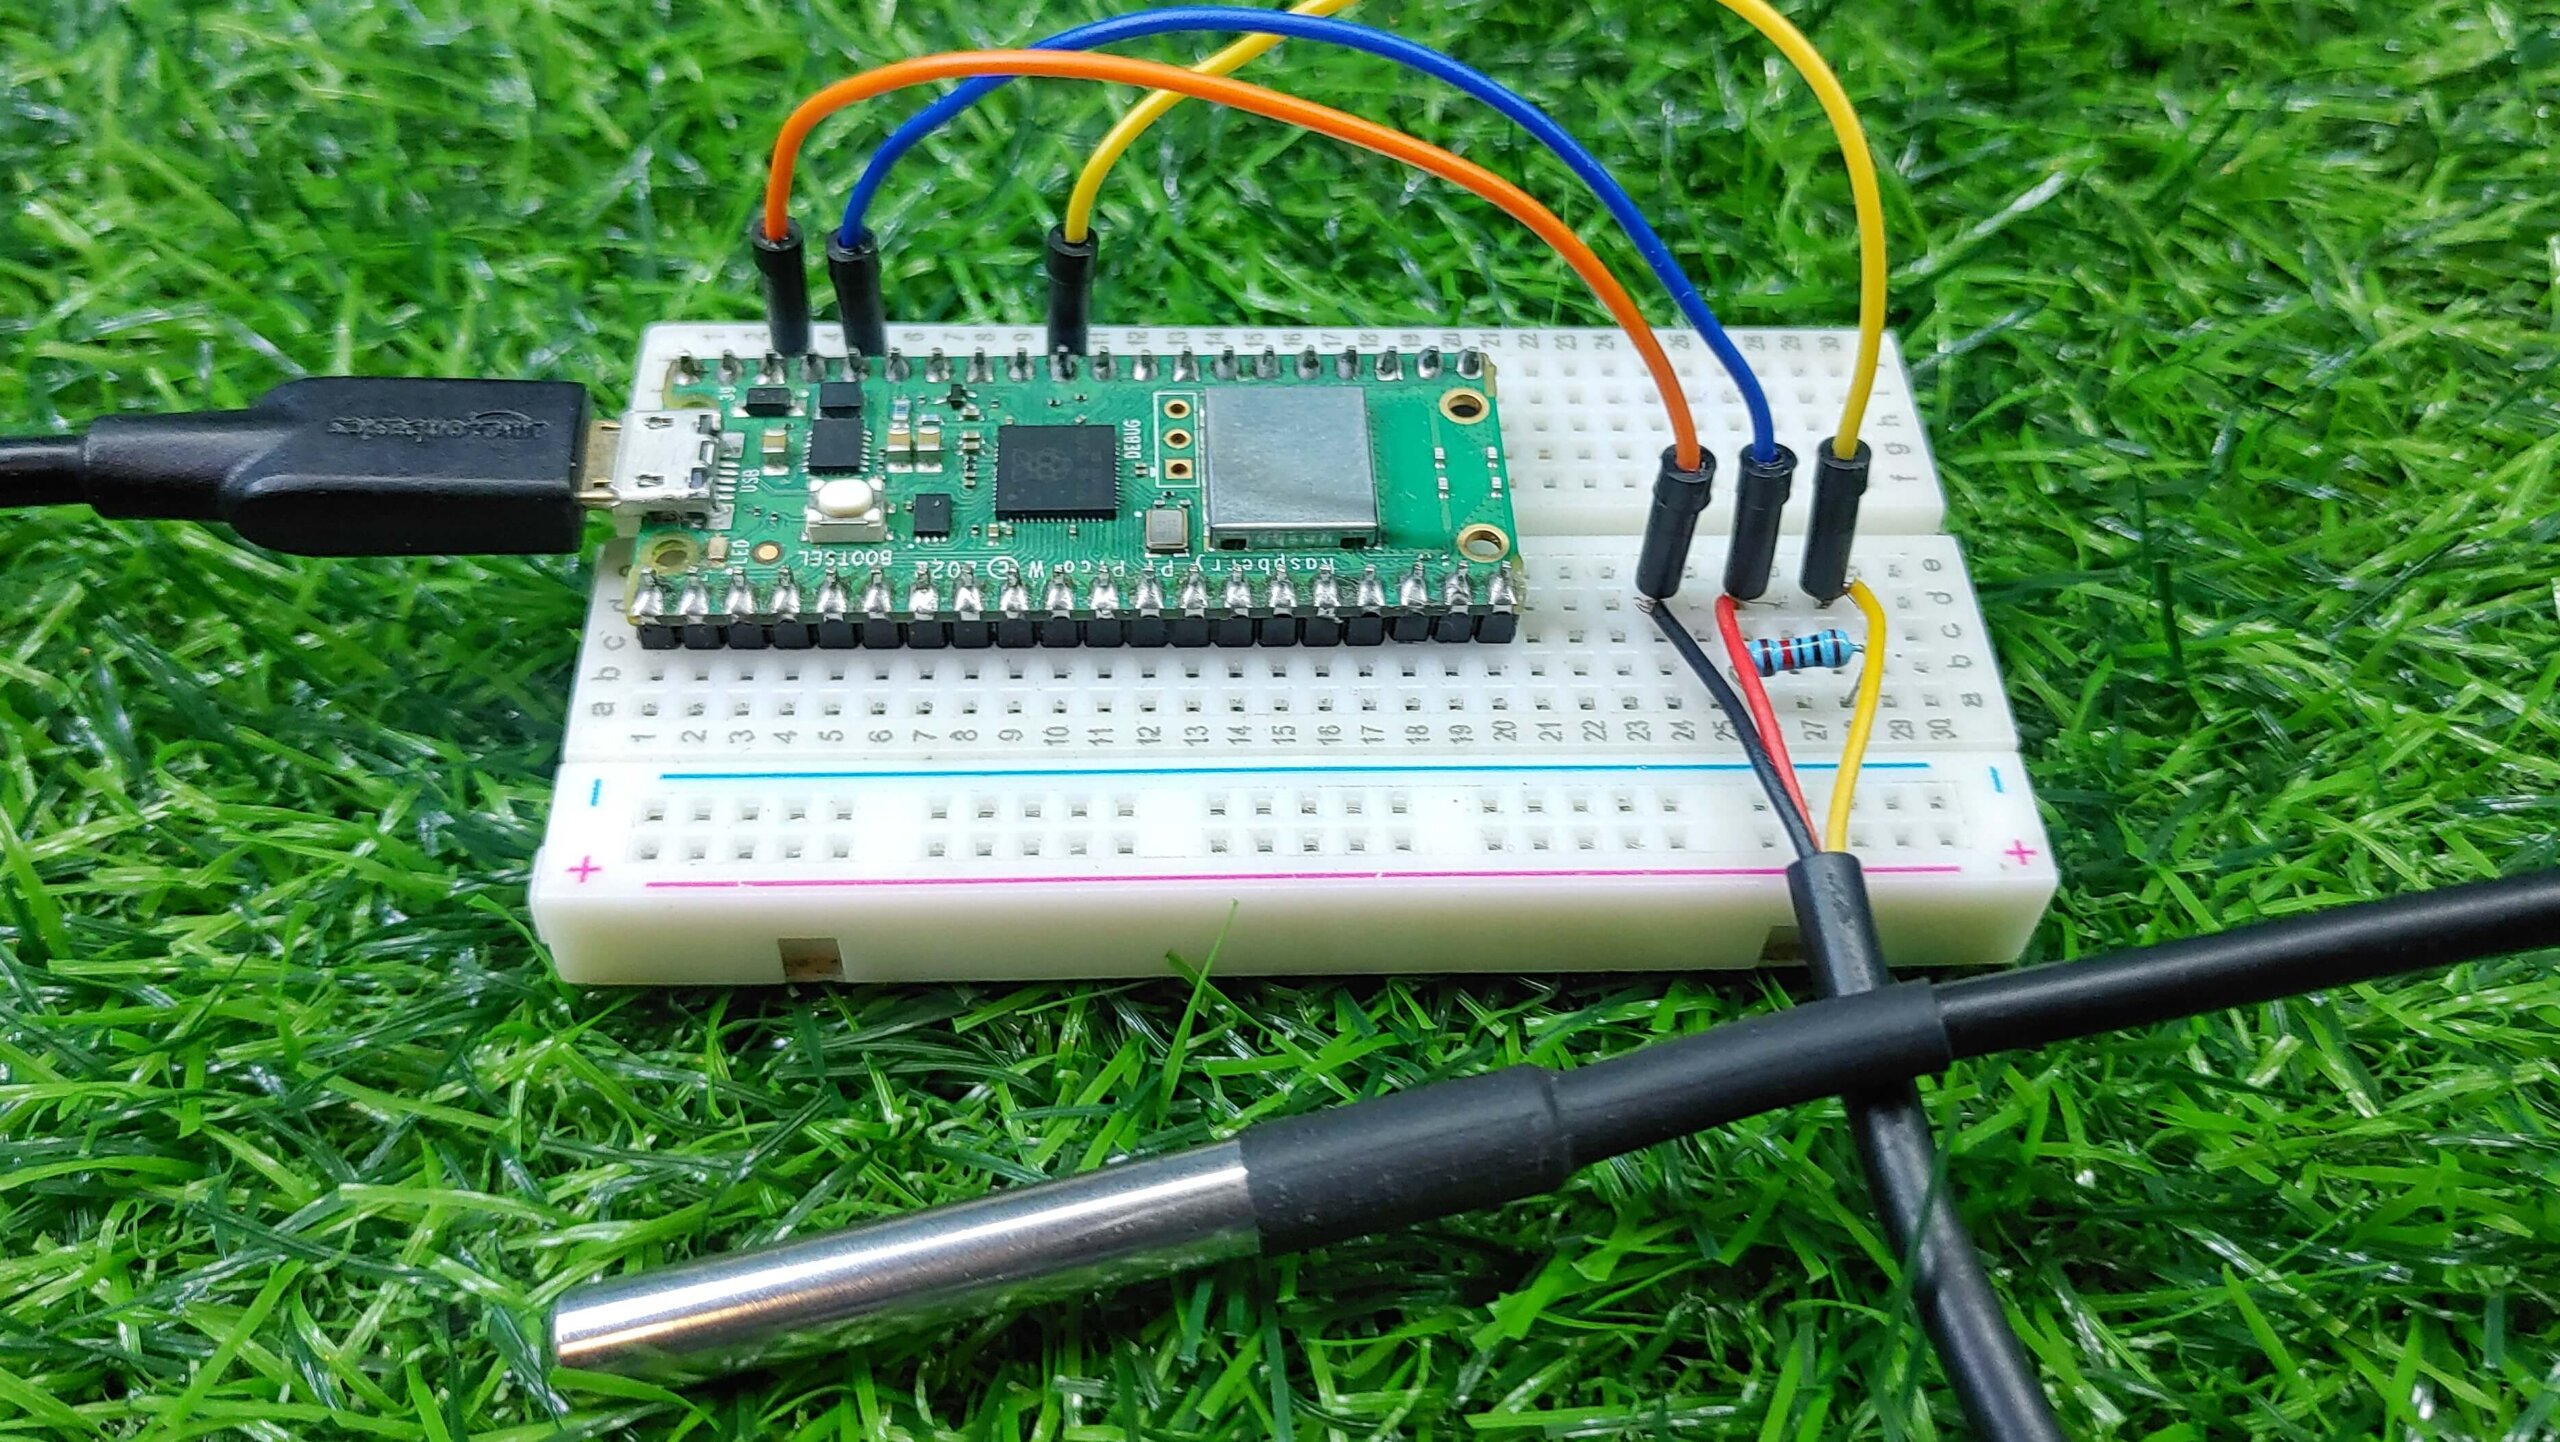 DS18B20 Temperature Sensor With Raspberry Pi Pico